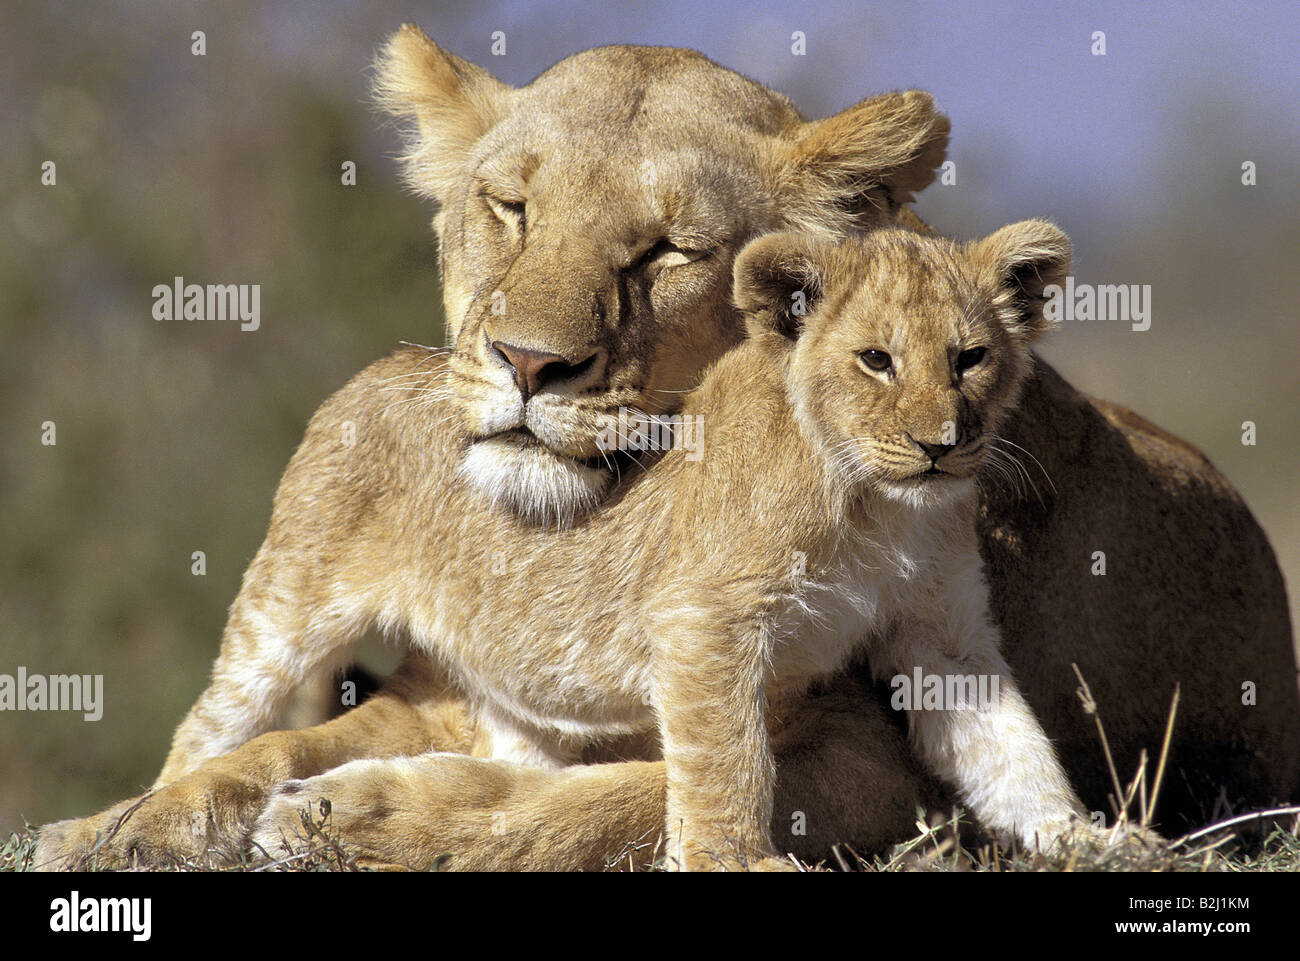 Zoologie / Tiere, Säugetier / Säugetier-, Felidae, Löwe (Panthera Leo), weibliche Löwen mit Cub, Masai Mara Reserve, Kenia, Vertrieb Stockfoto